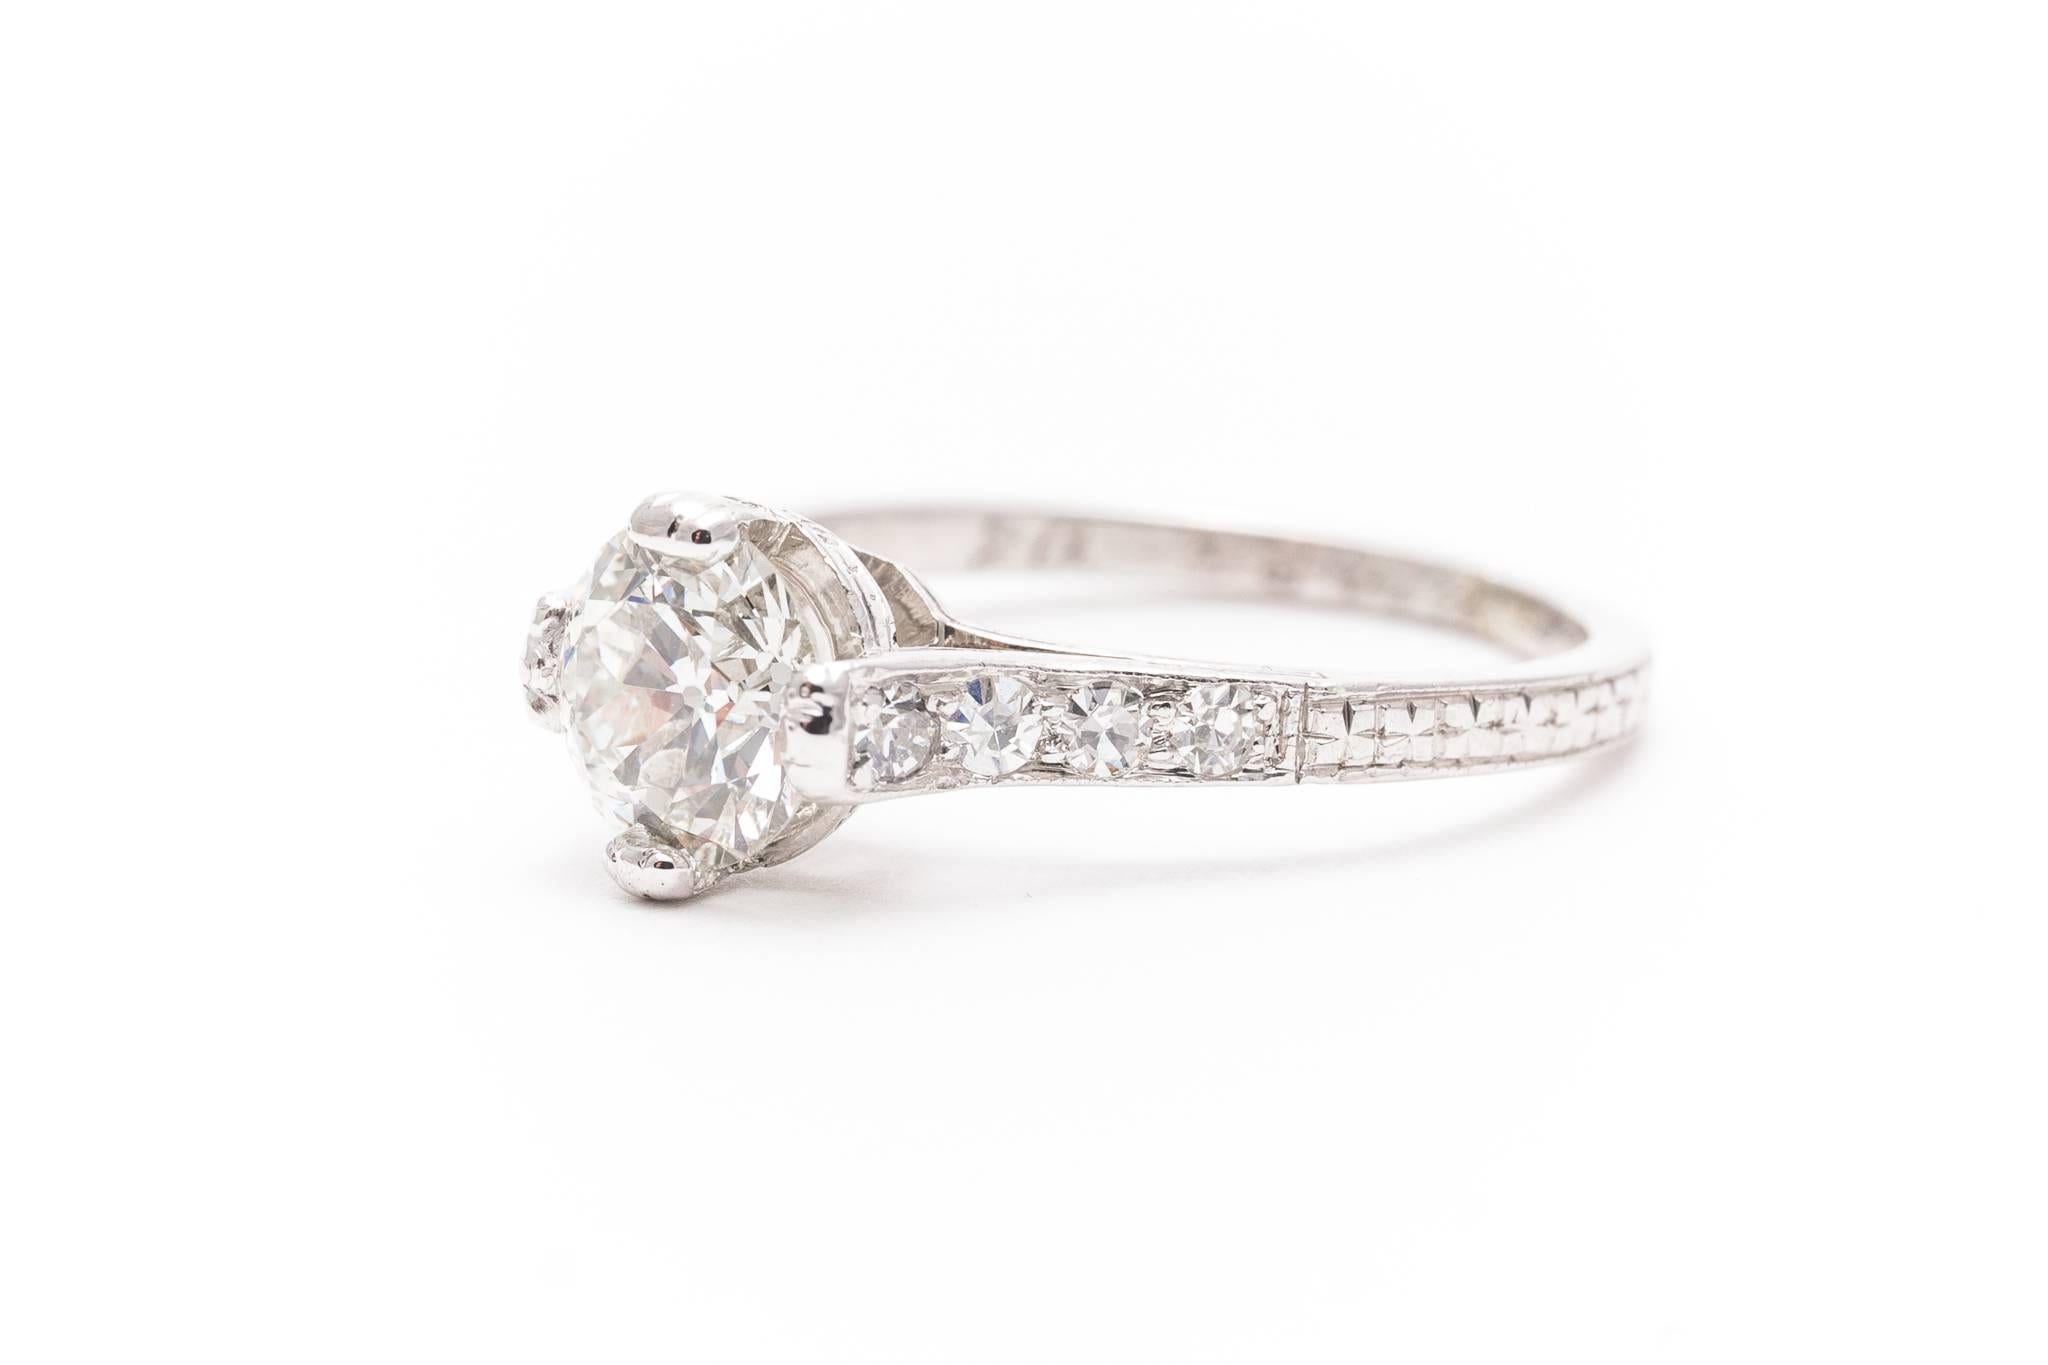 Art Deco Edwardian 1.18 Carat Diamond Engagement Ring in Luxurious Platinum